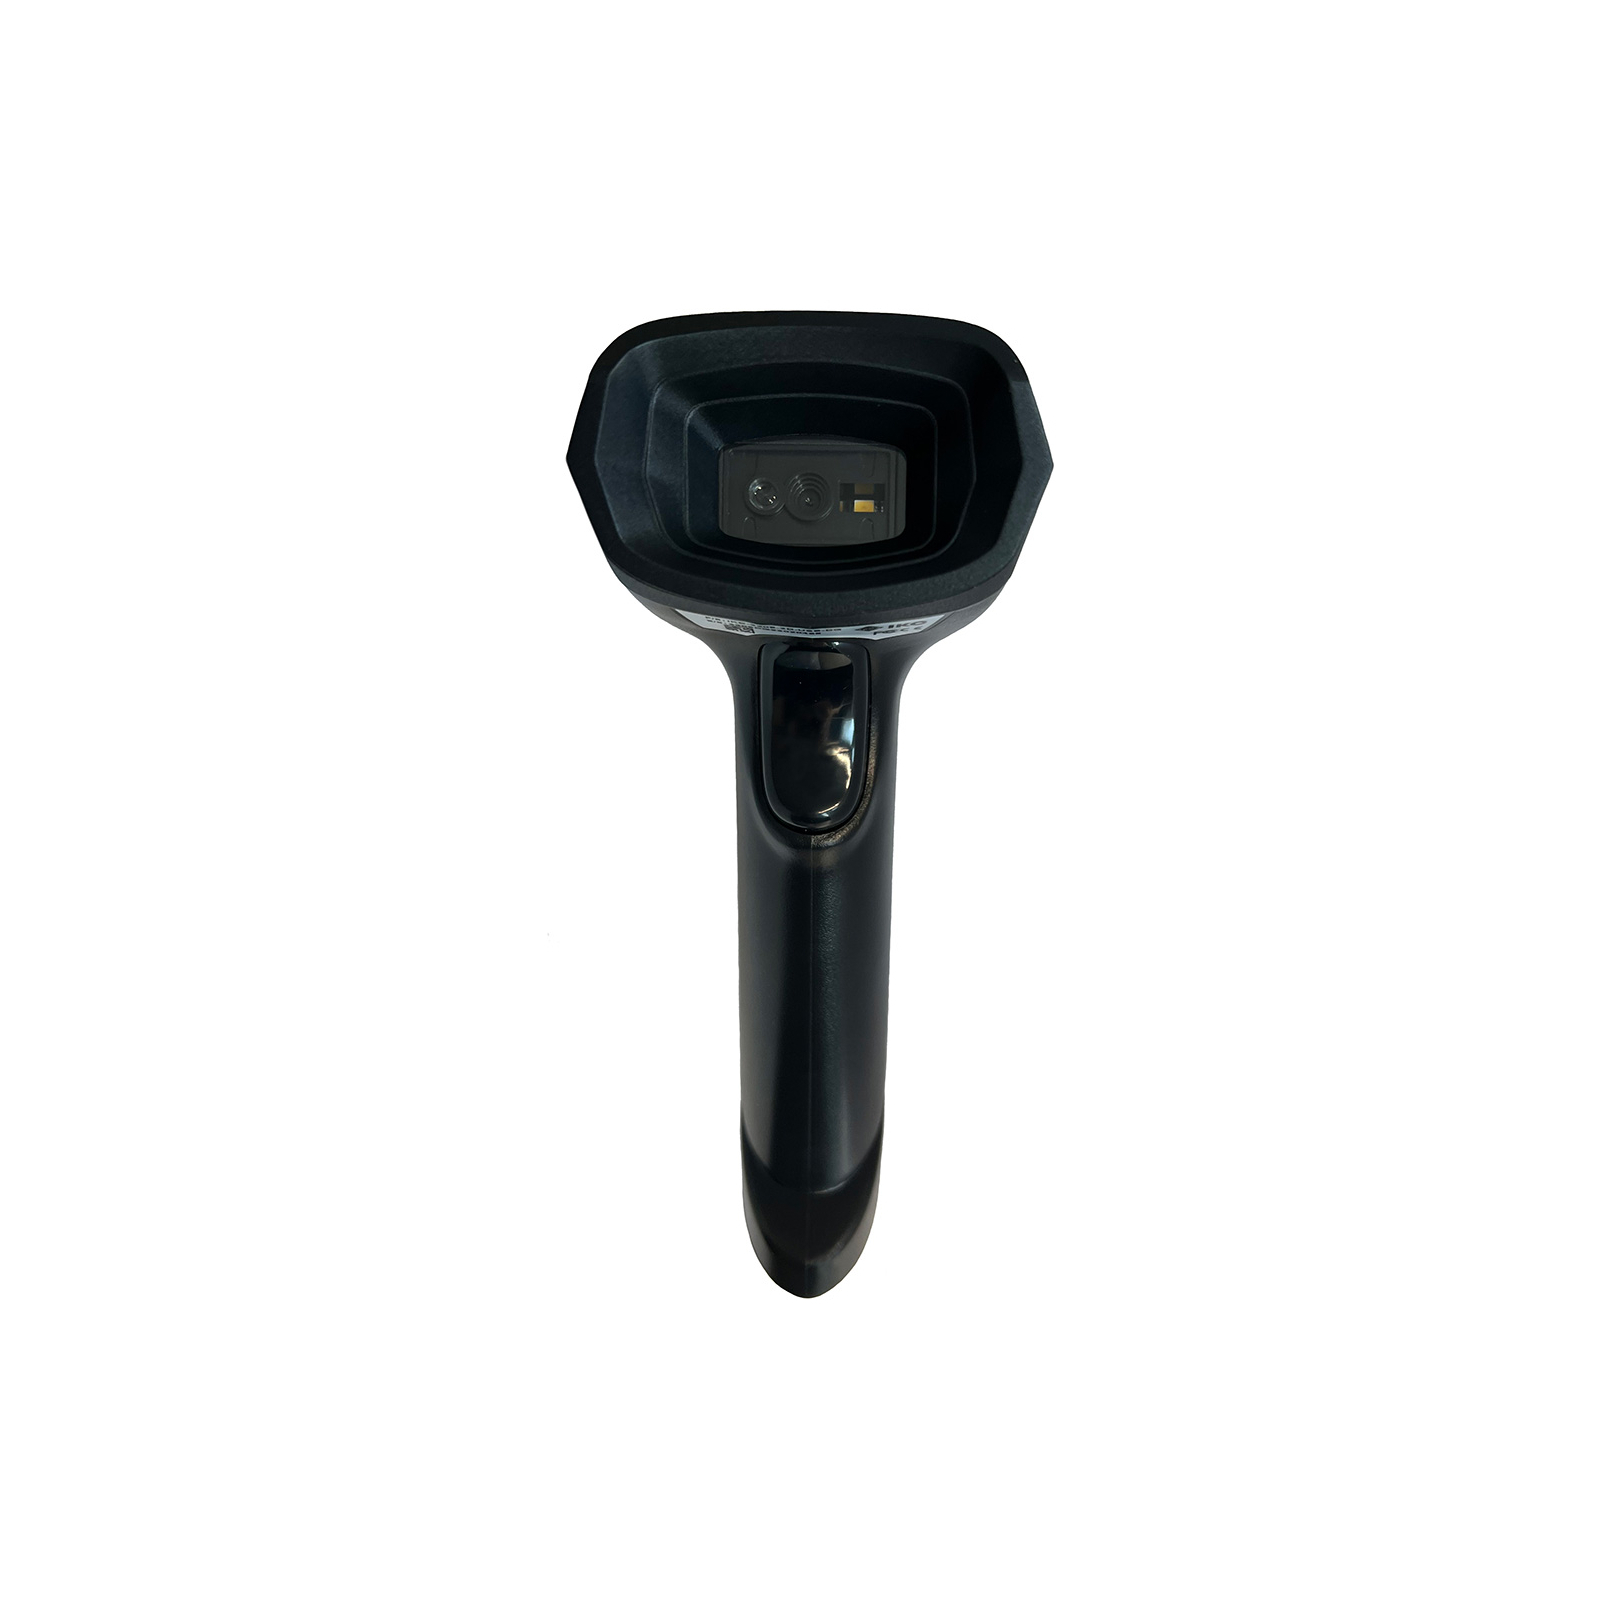 Сканер штрих-кода ІКС ІКС-3209 2D, USB, stand, black (ІКС-3209-2D-USB) изображение 3